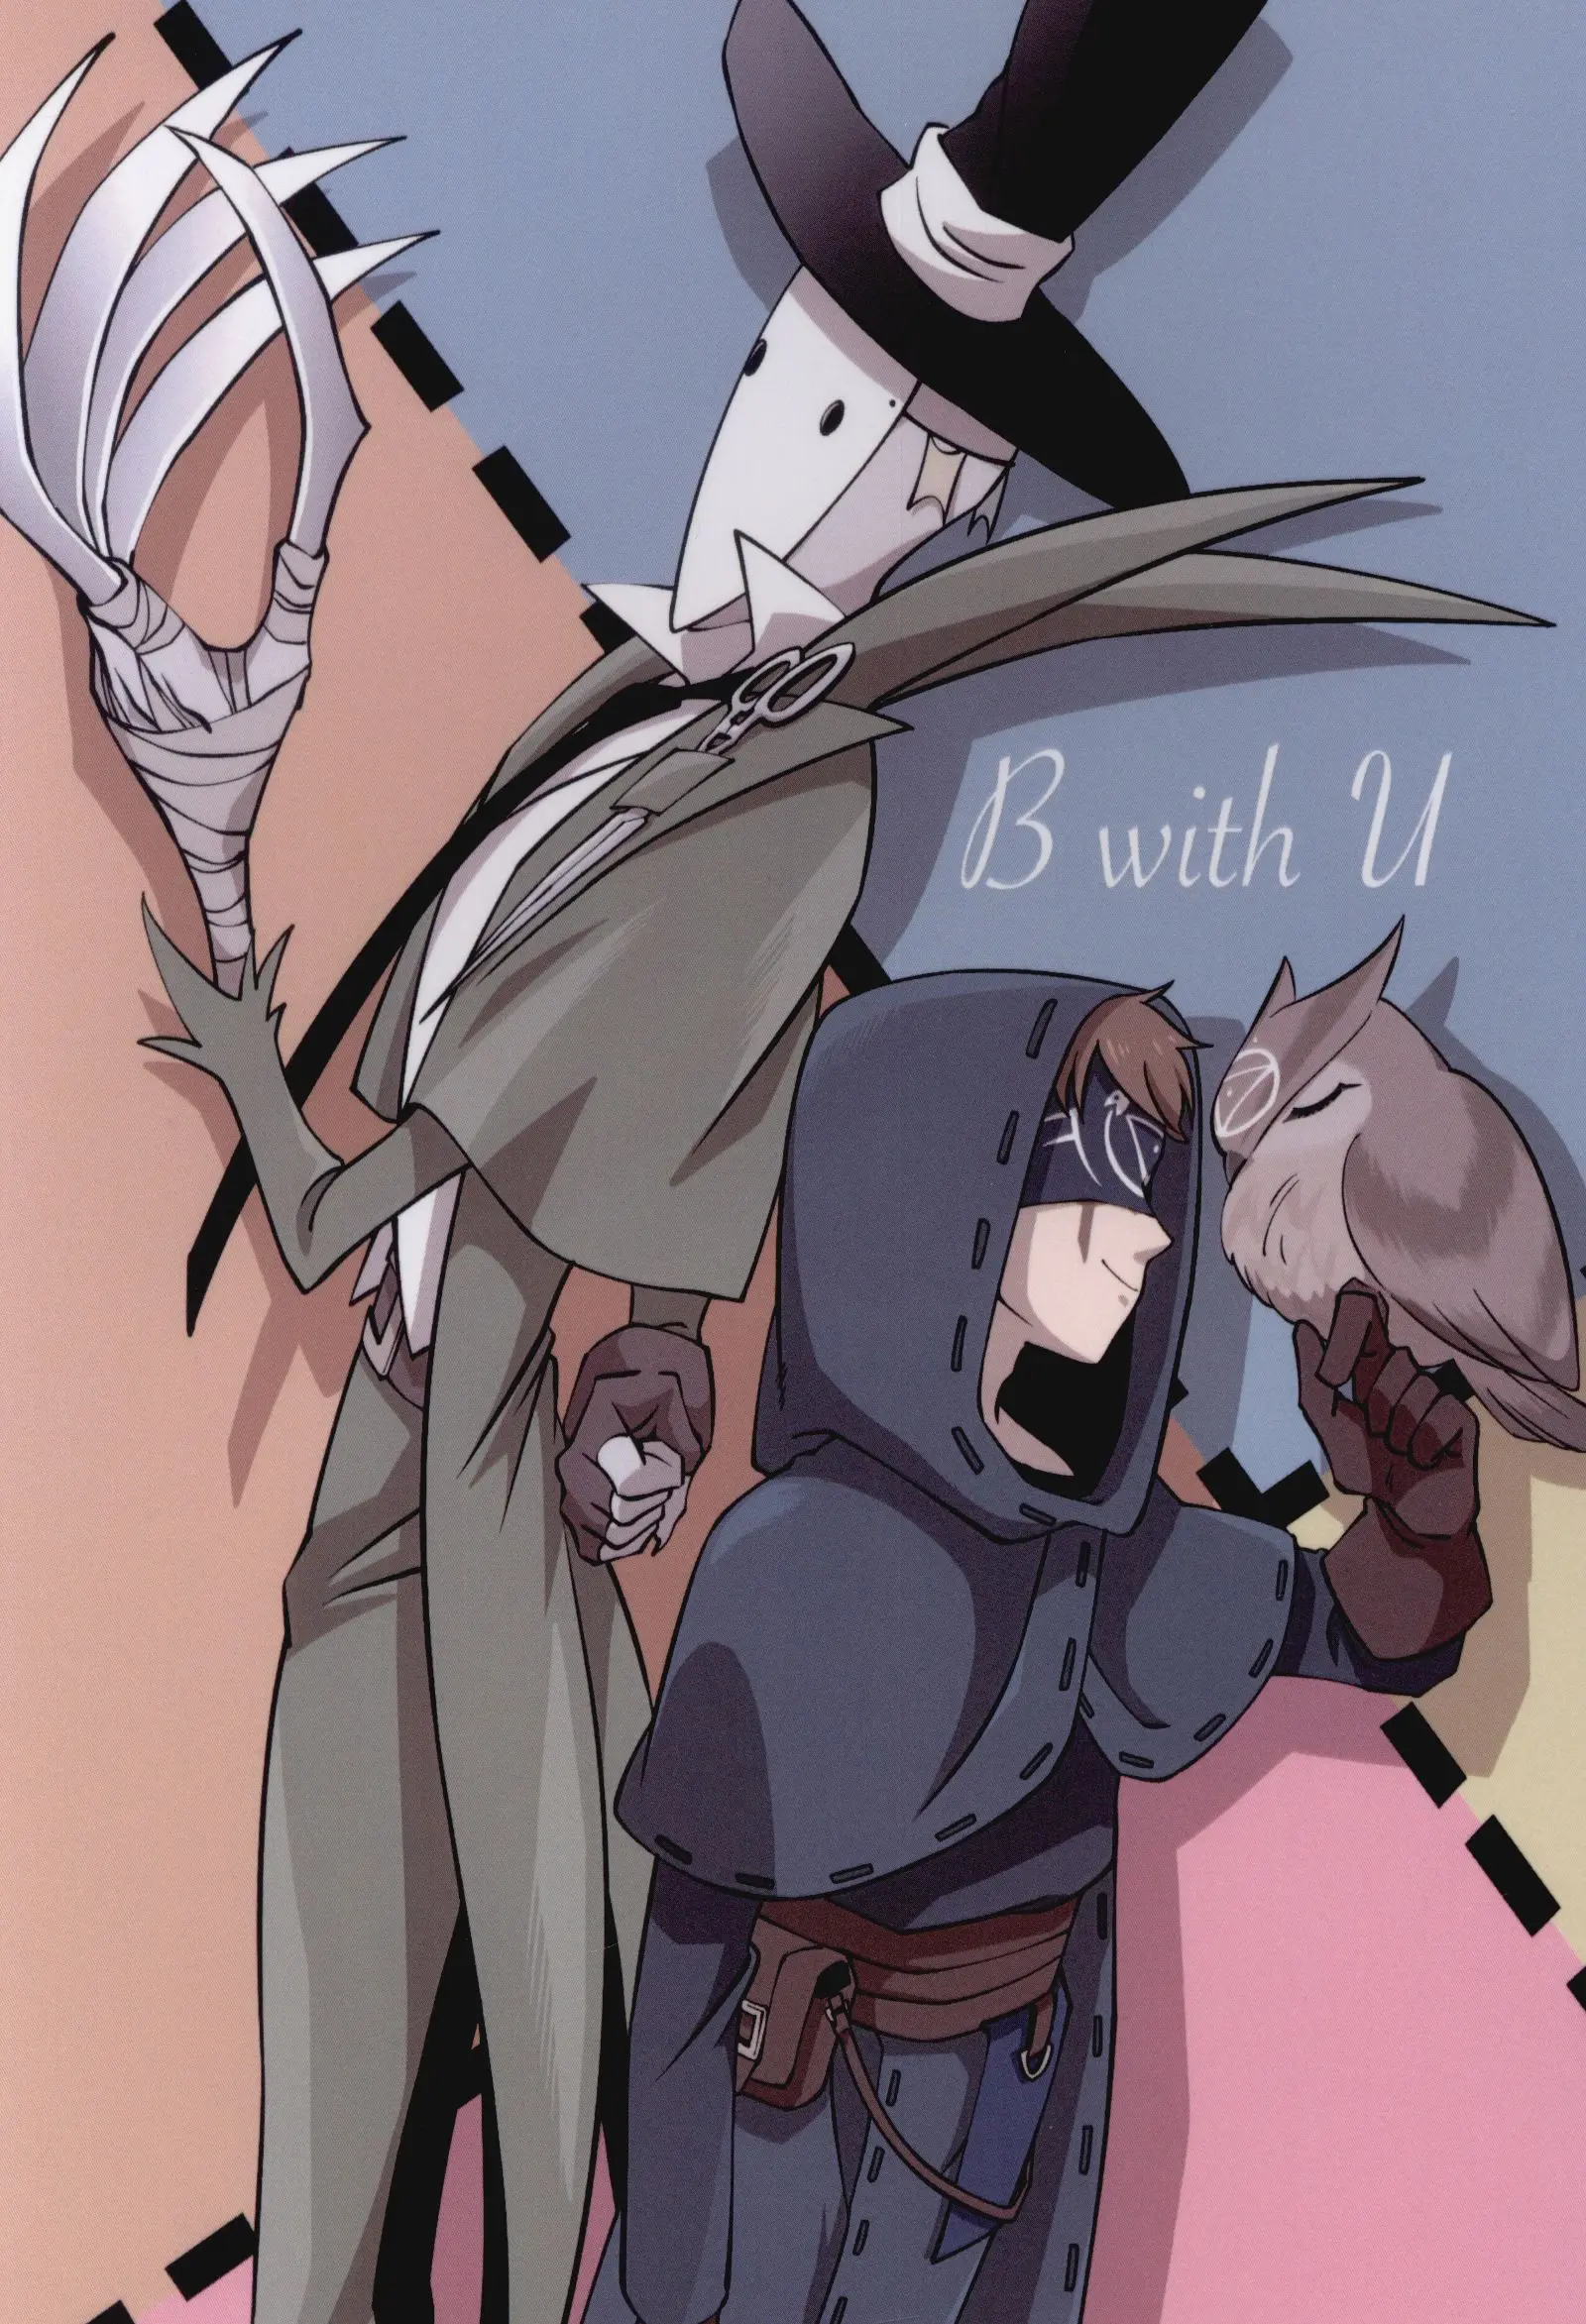 Doujinshi - Identity V / Jack x Eli (B with U) / DA!